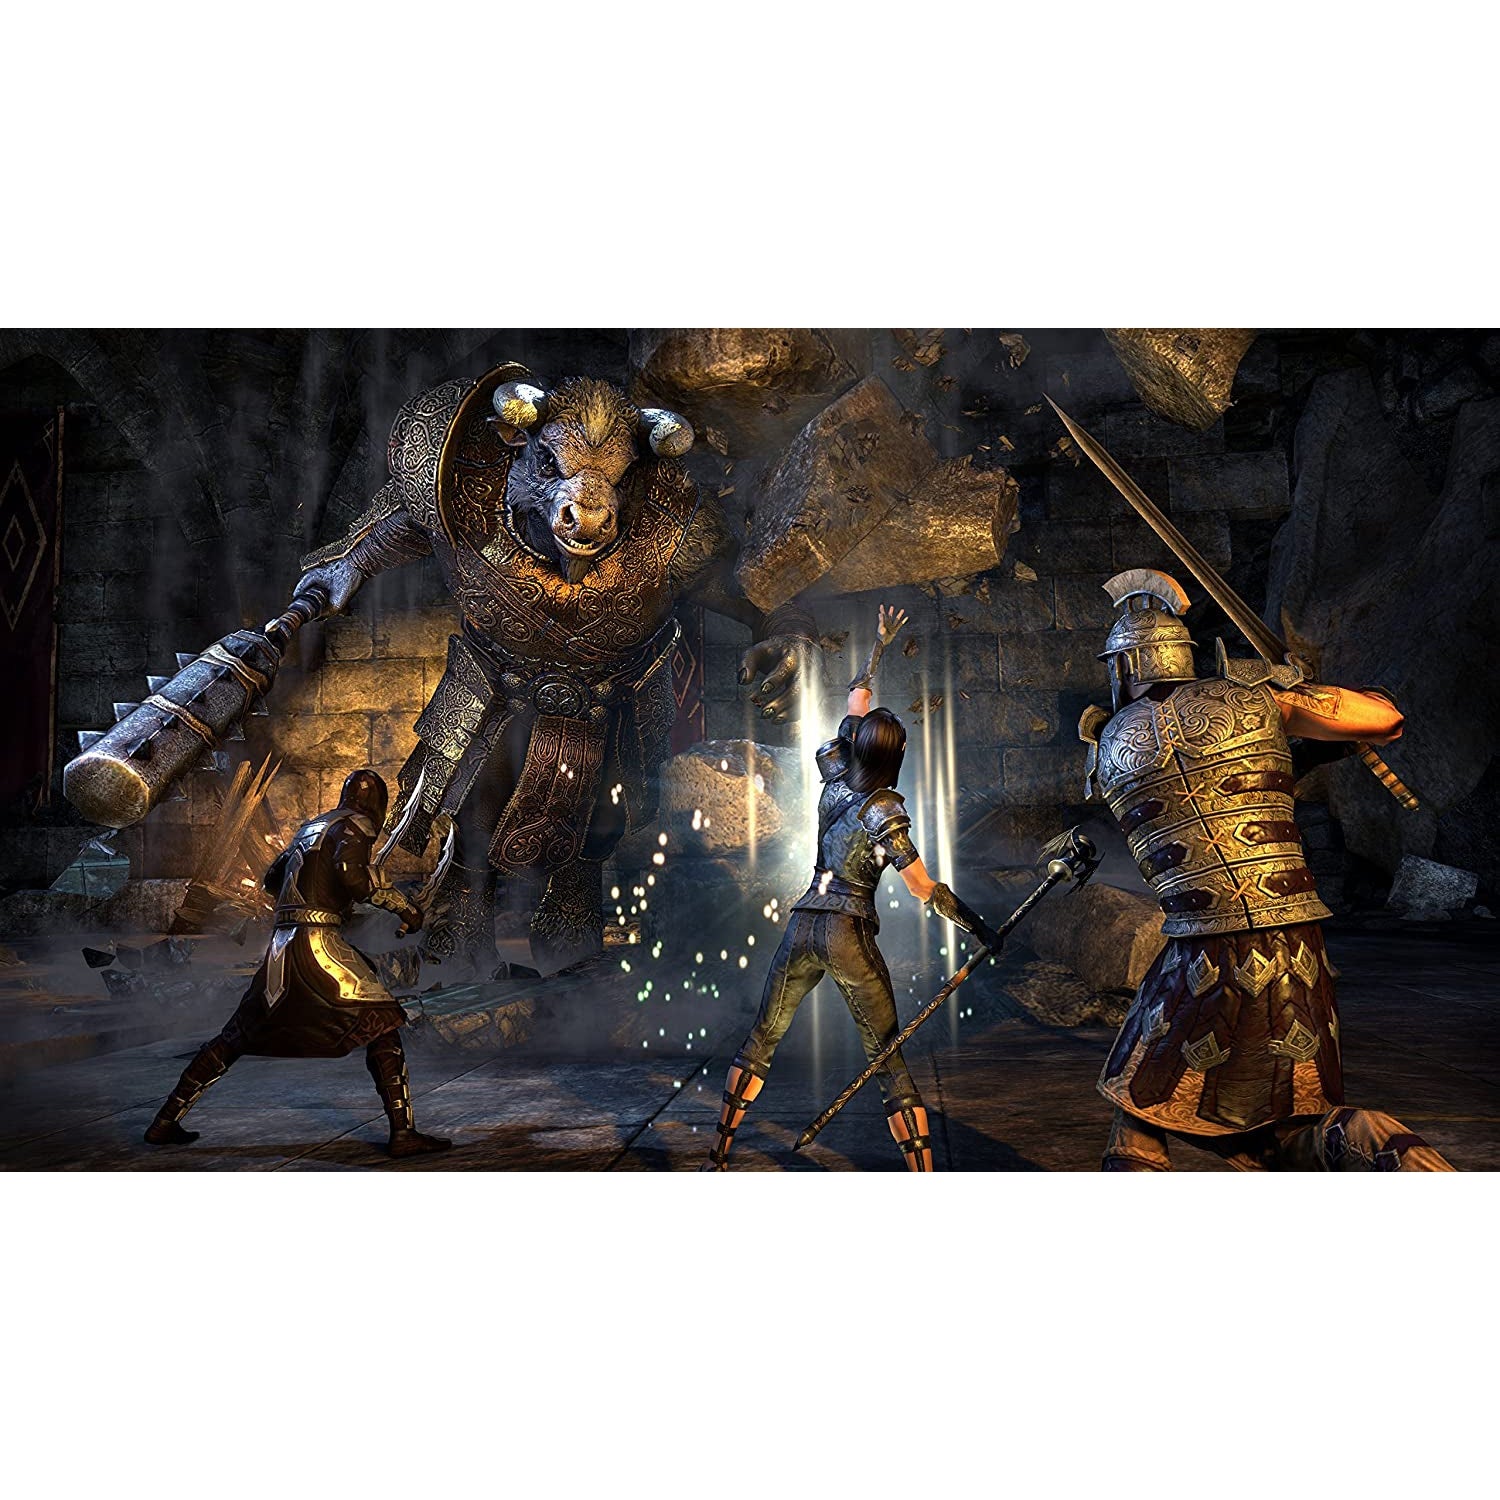 The Elder Scrolls Online Gold Edition (PS4)